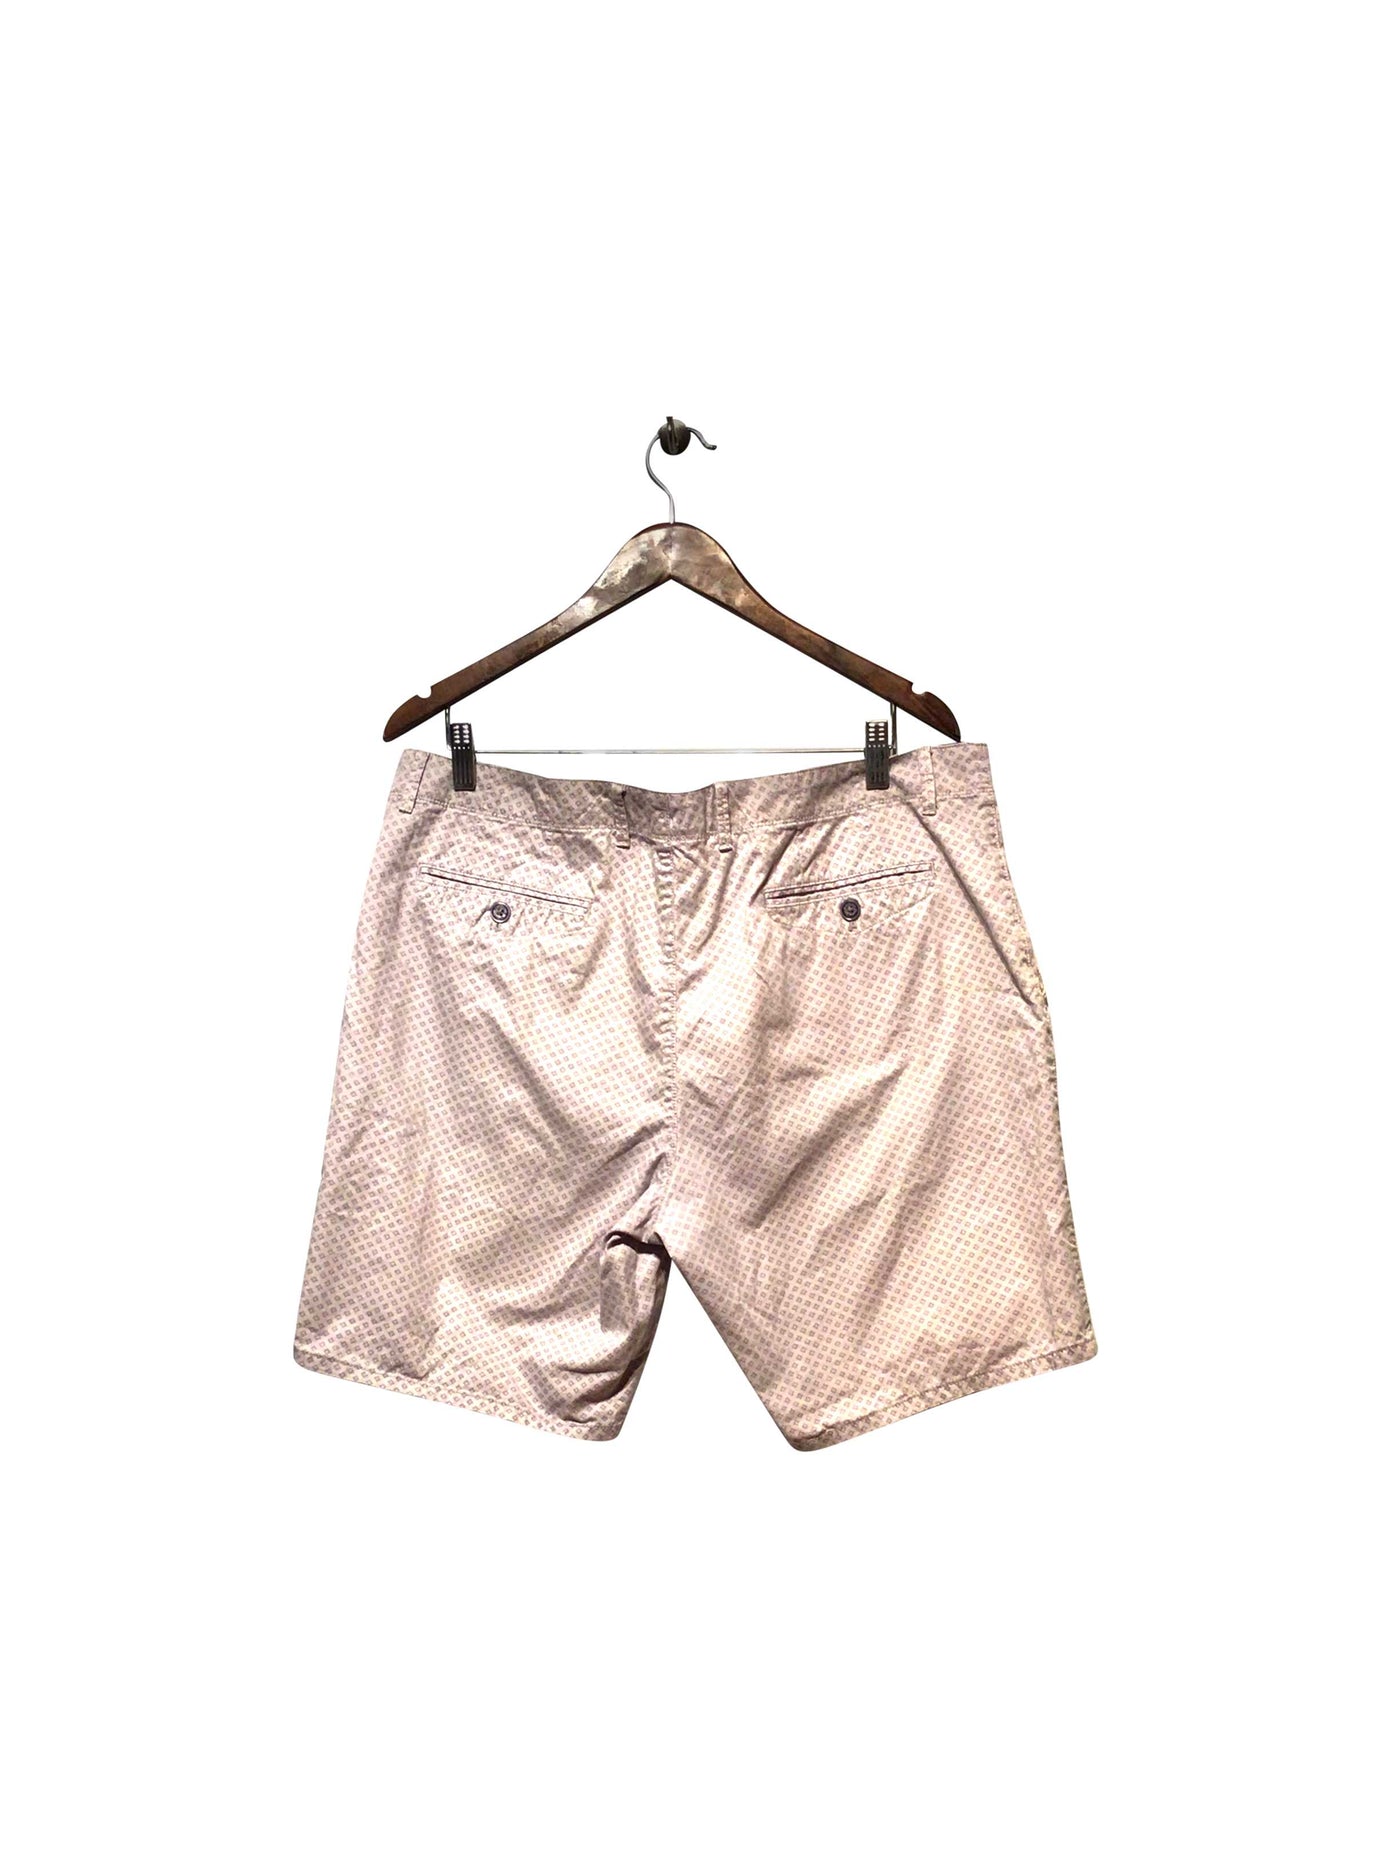 MASSIMO DUTTI Regular fit Pant Shorts in Gray  -  36  14.50 Koop